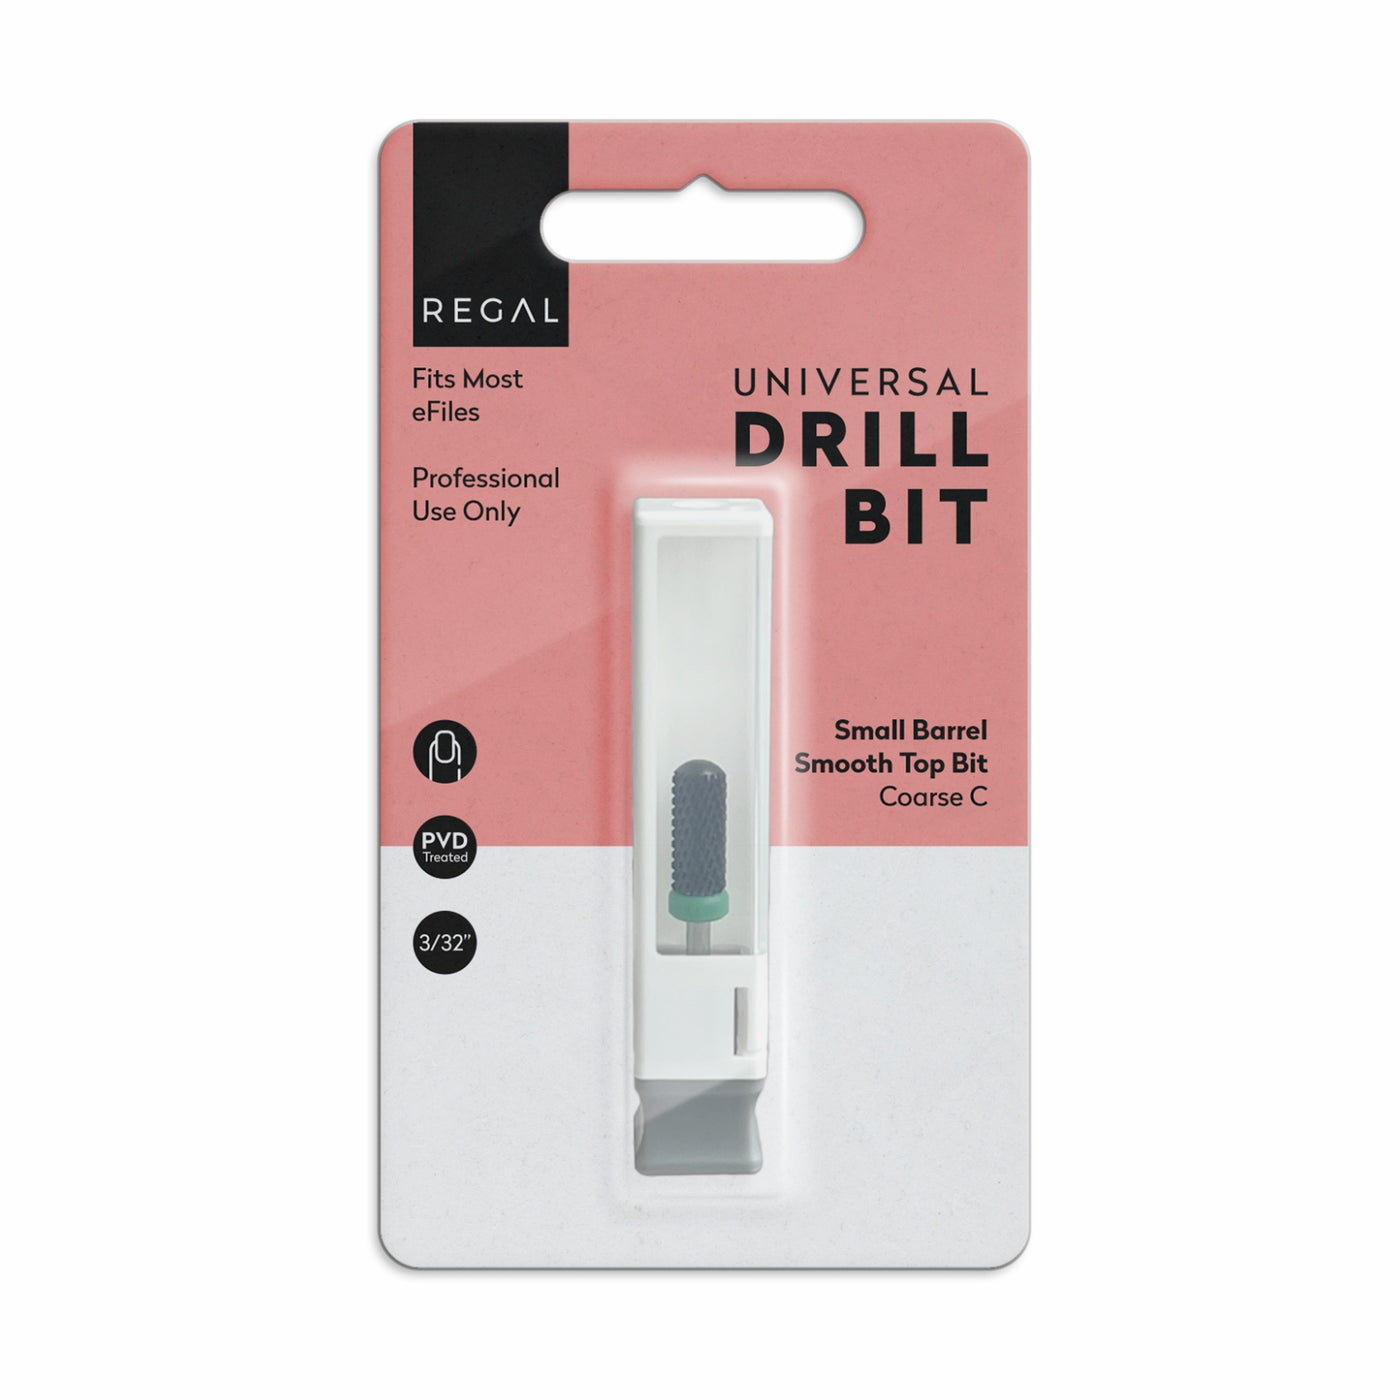 Regal by Anh E-File Drill Bit - Small Barrel Smooth Top Bit - Coarse C